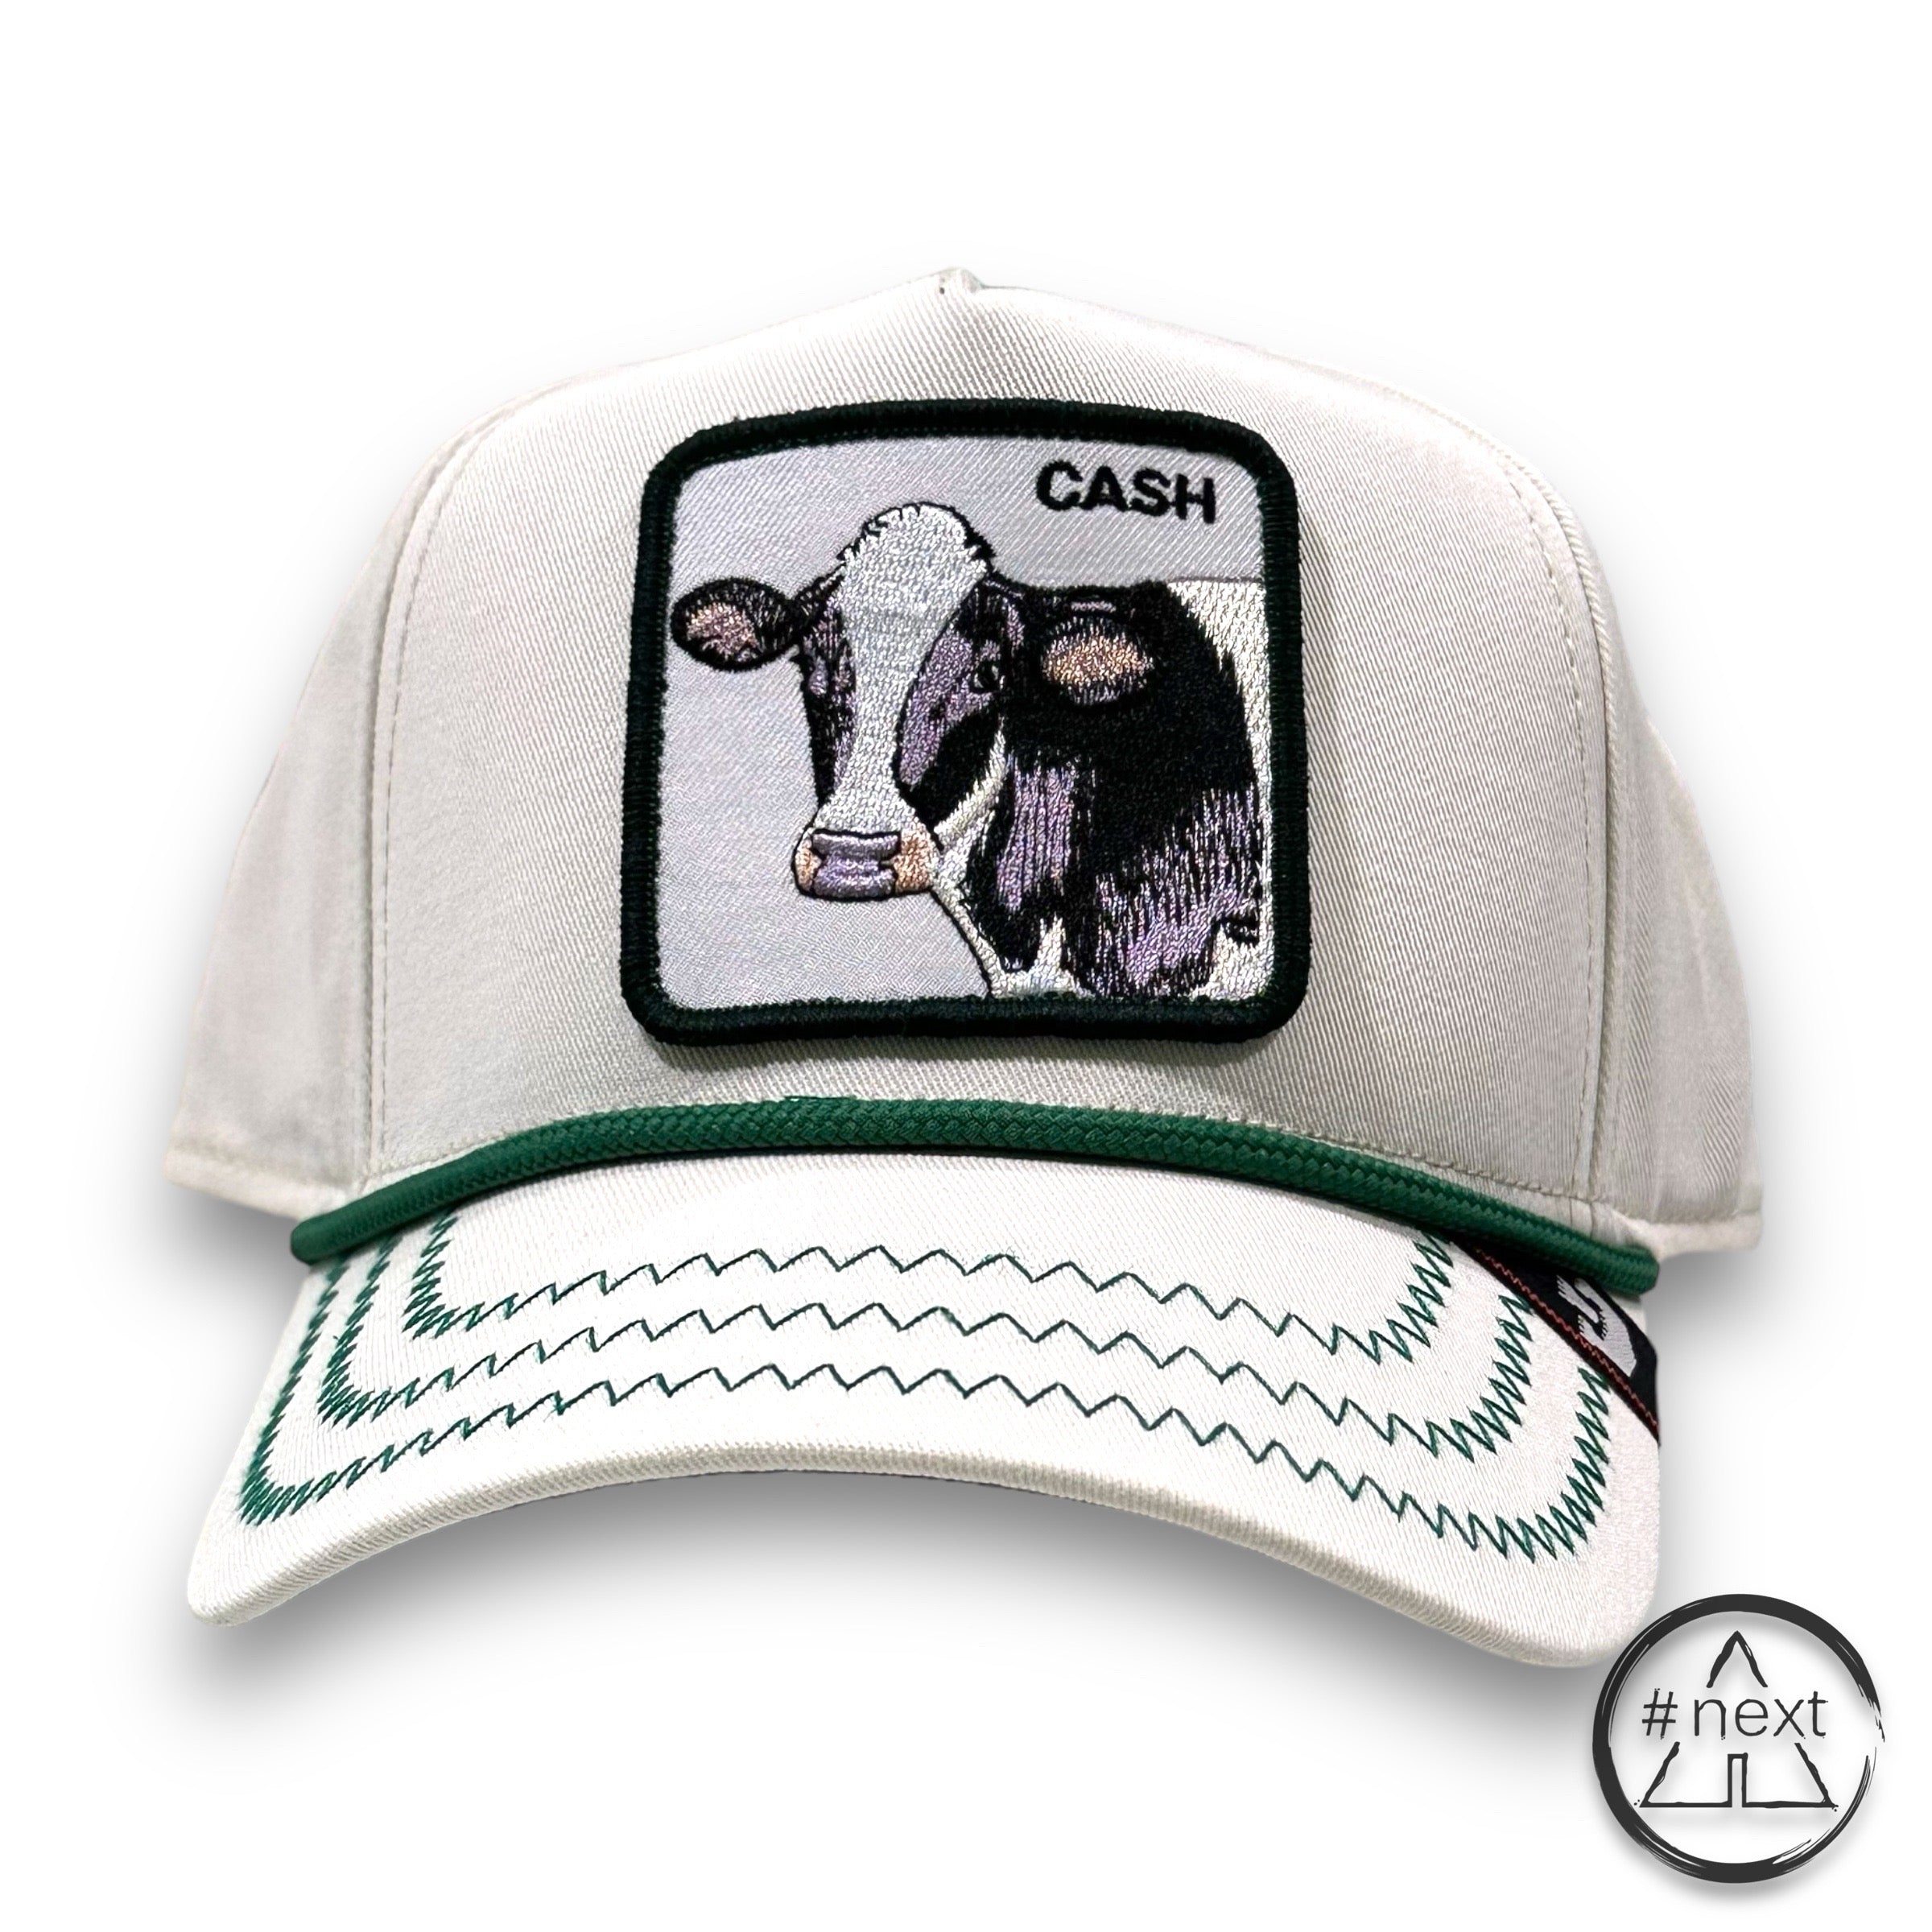 Goorin Bros - The Farm - Trucker CANVAS - The Cash Cow (Bianco)